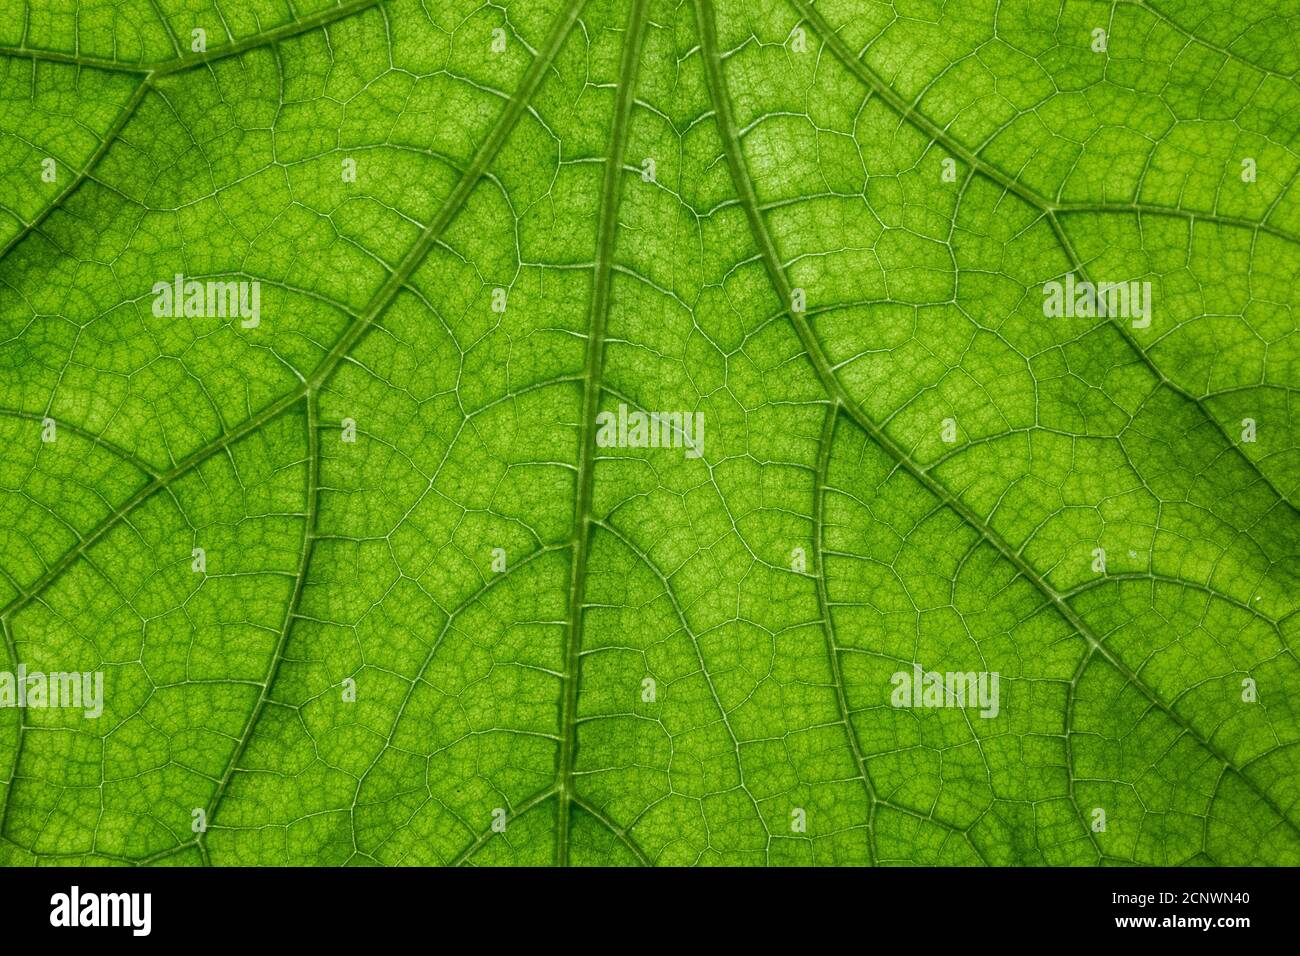 Big green leaf with many leaf veins Stock Photo